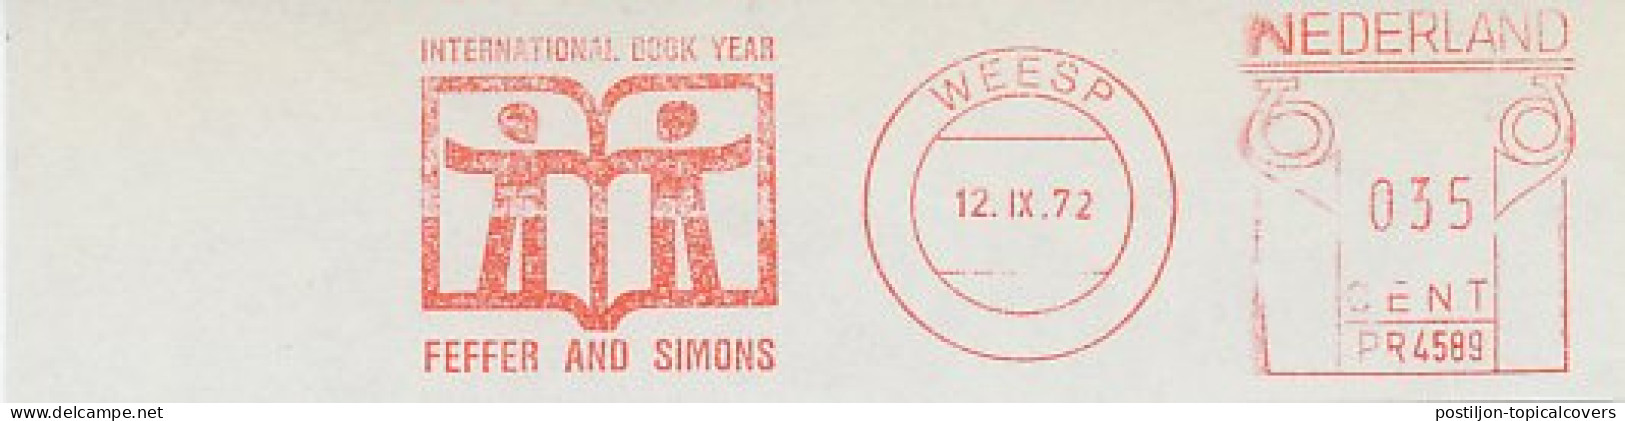 Meter Cut Netherlands 1972 International Book Year - United Nations - UNESCO - UNO